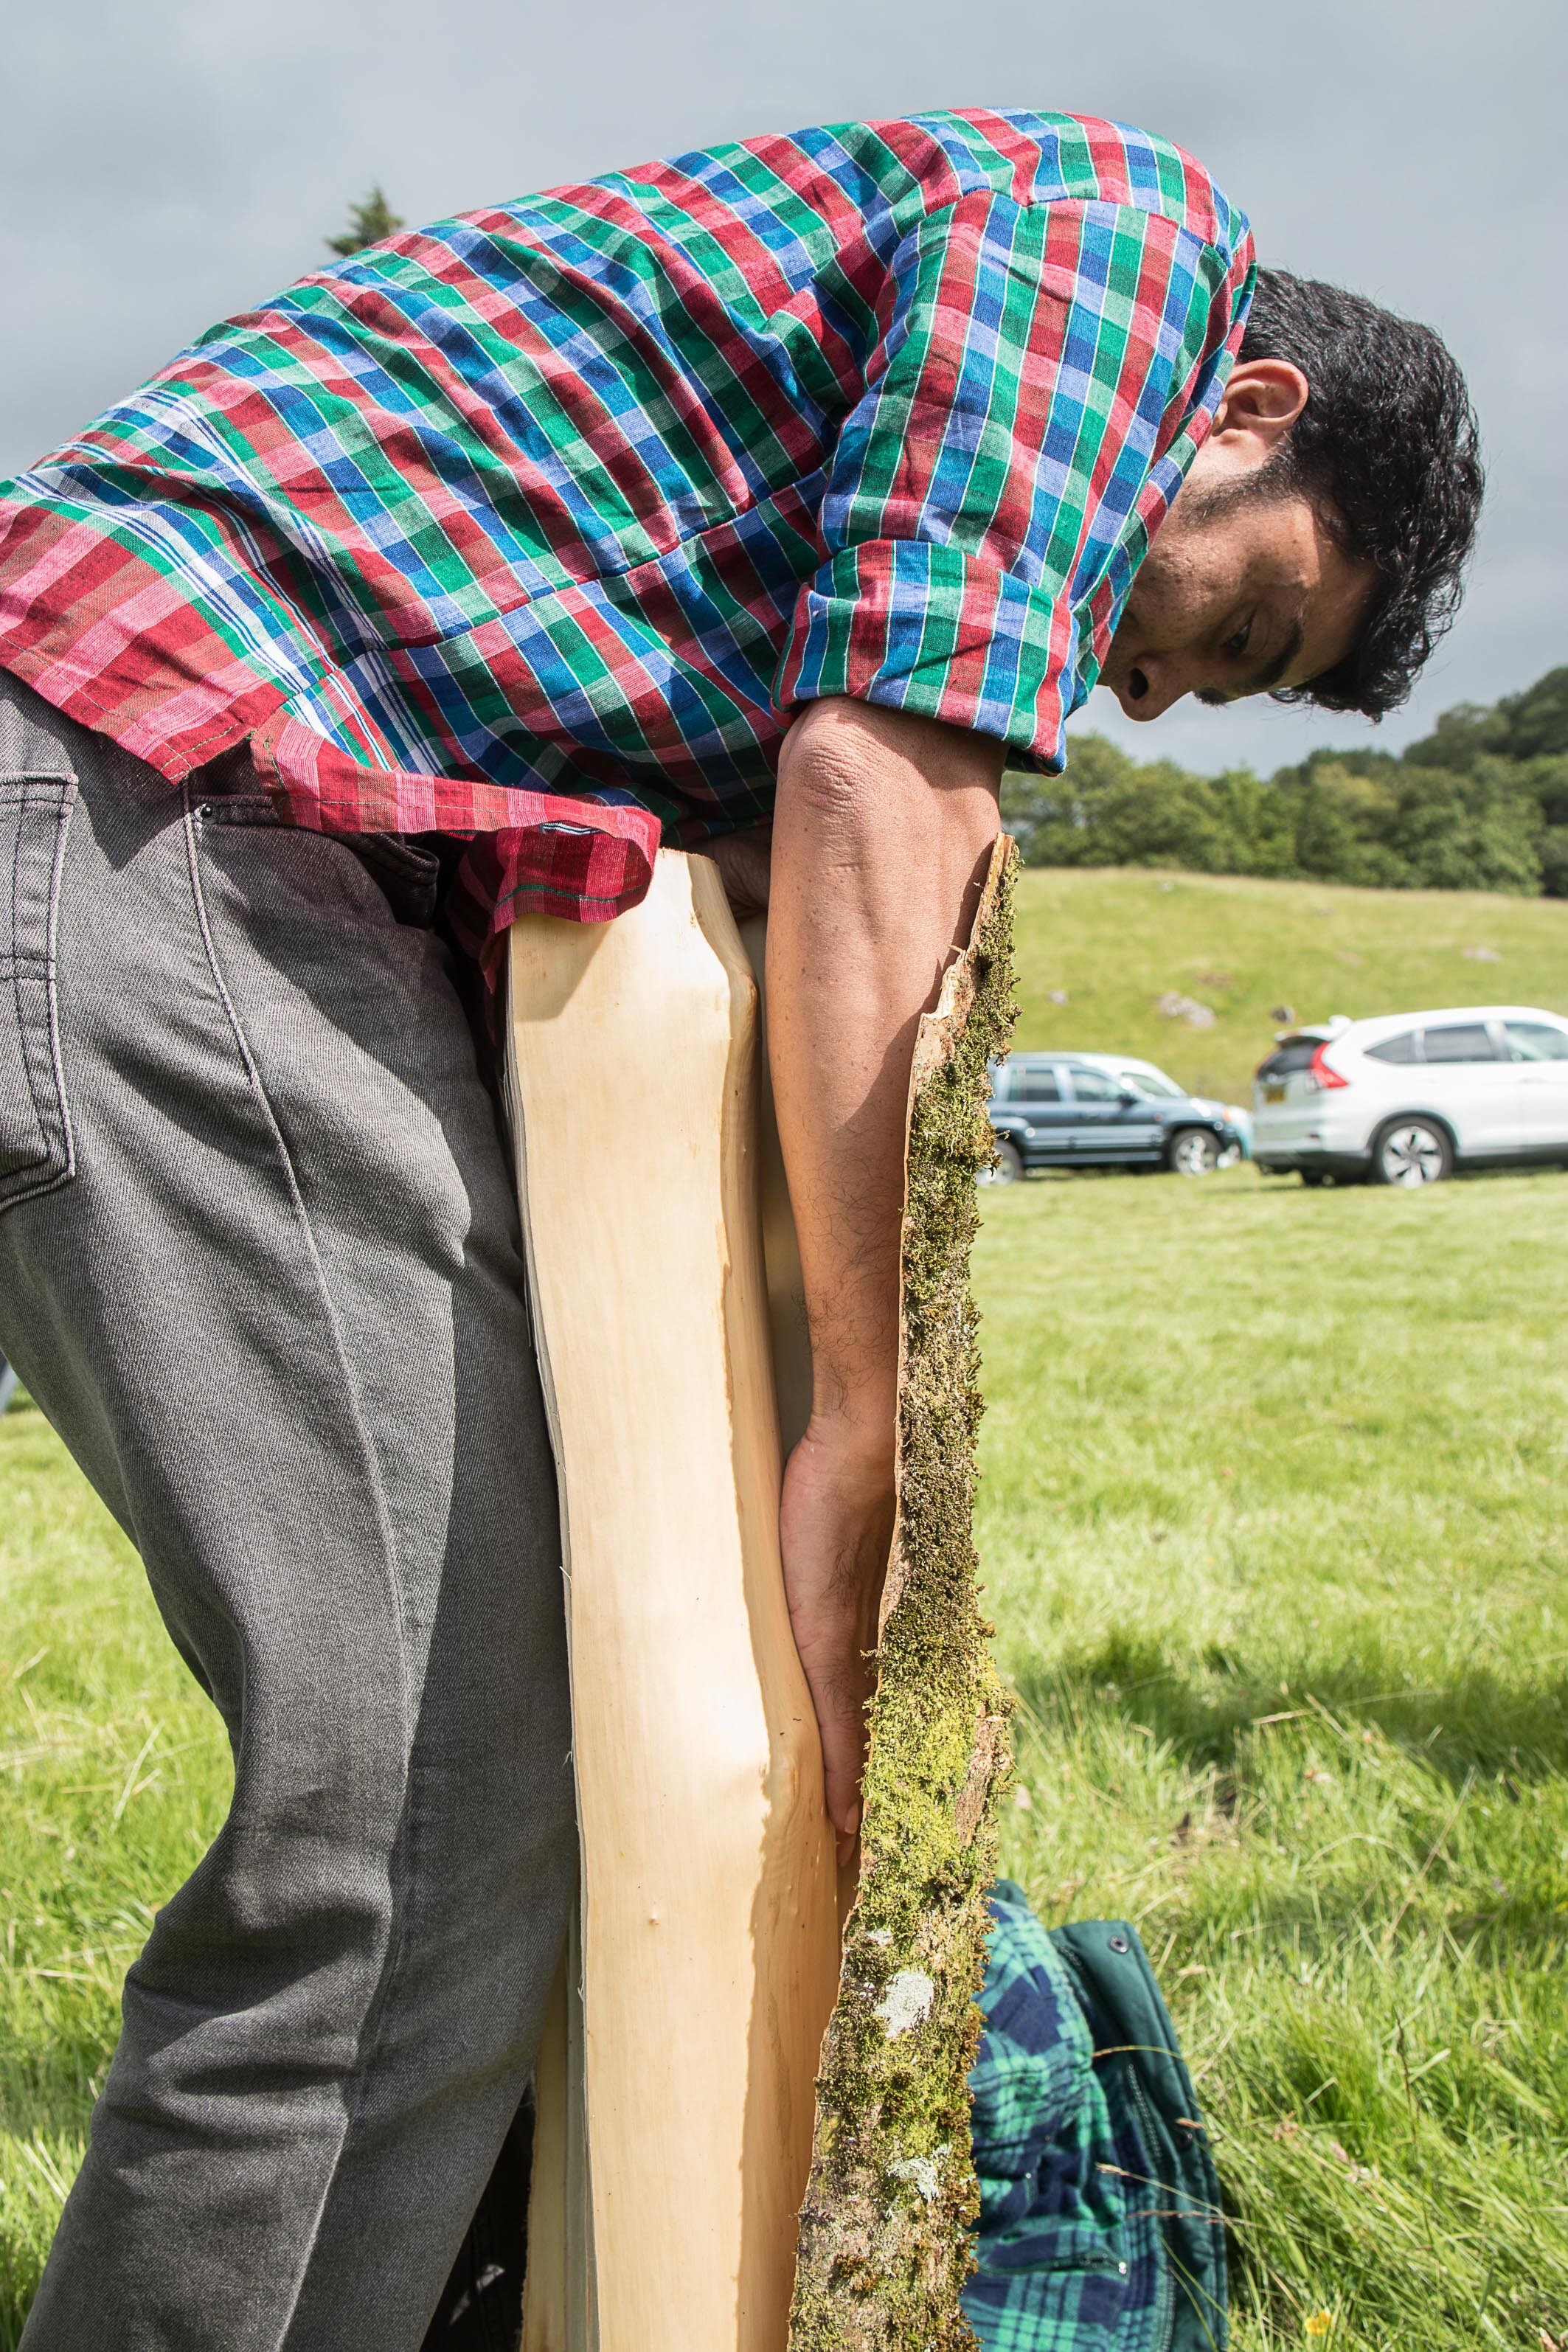 Vikram stripping bark at Capel Curig Carnifal (3 of 4).jpg